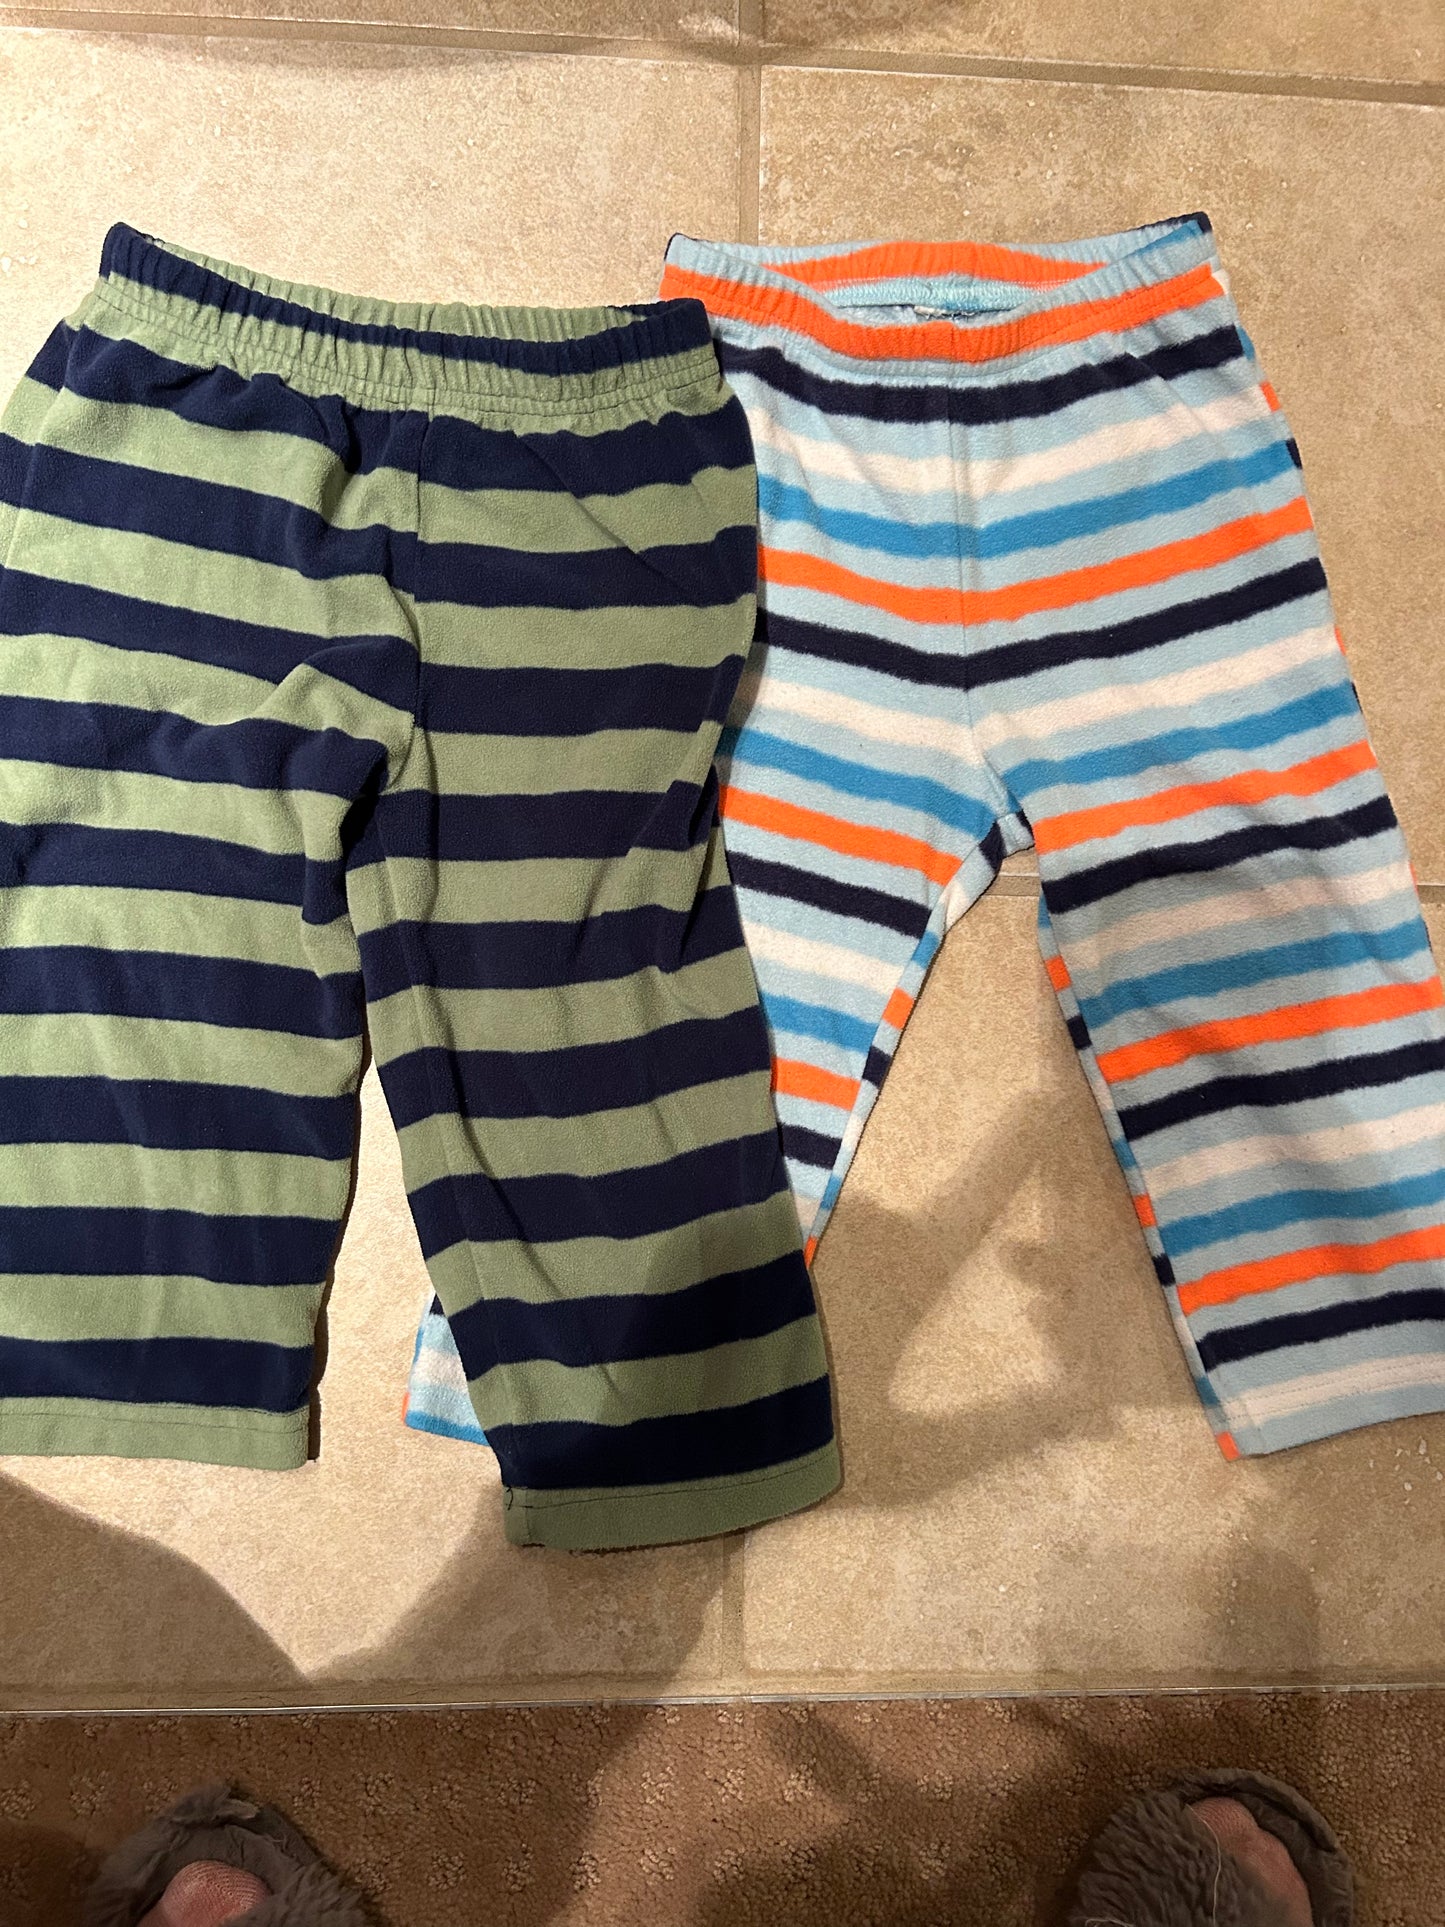 Set of 2 boys fleece pajamas pants 2t Carters and Amazon Essentials